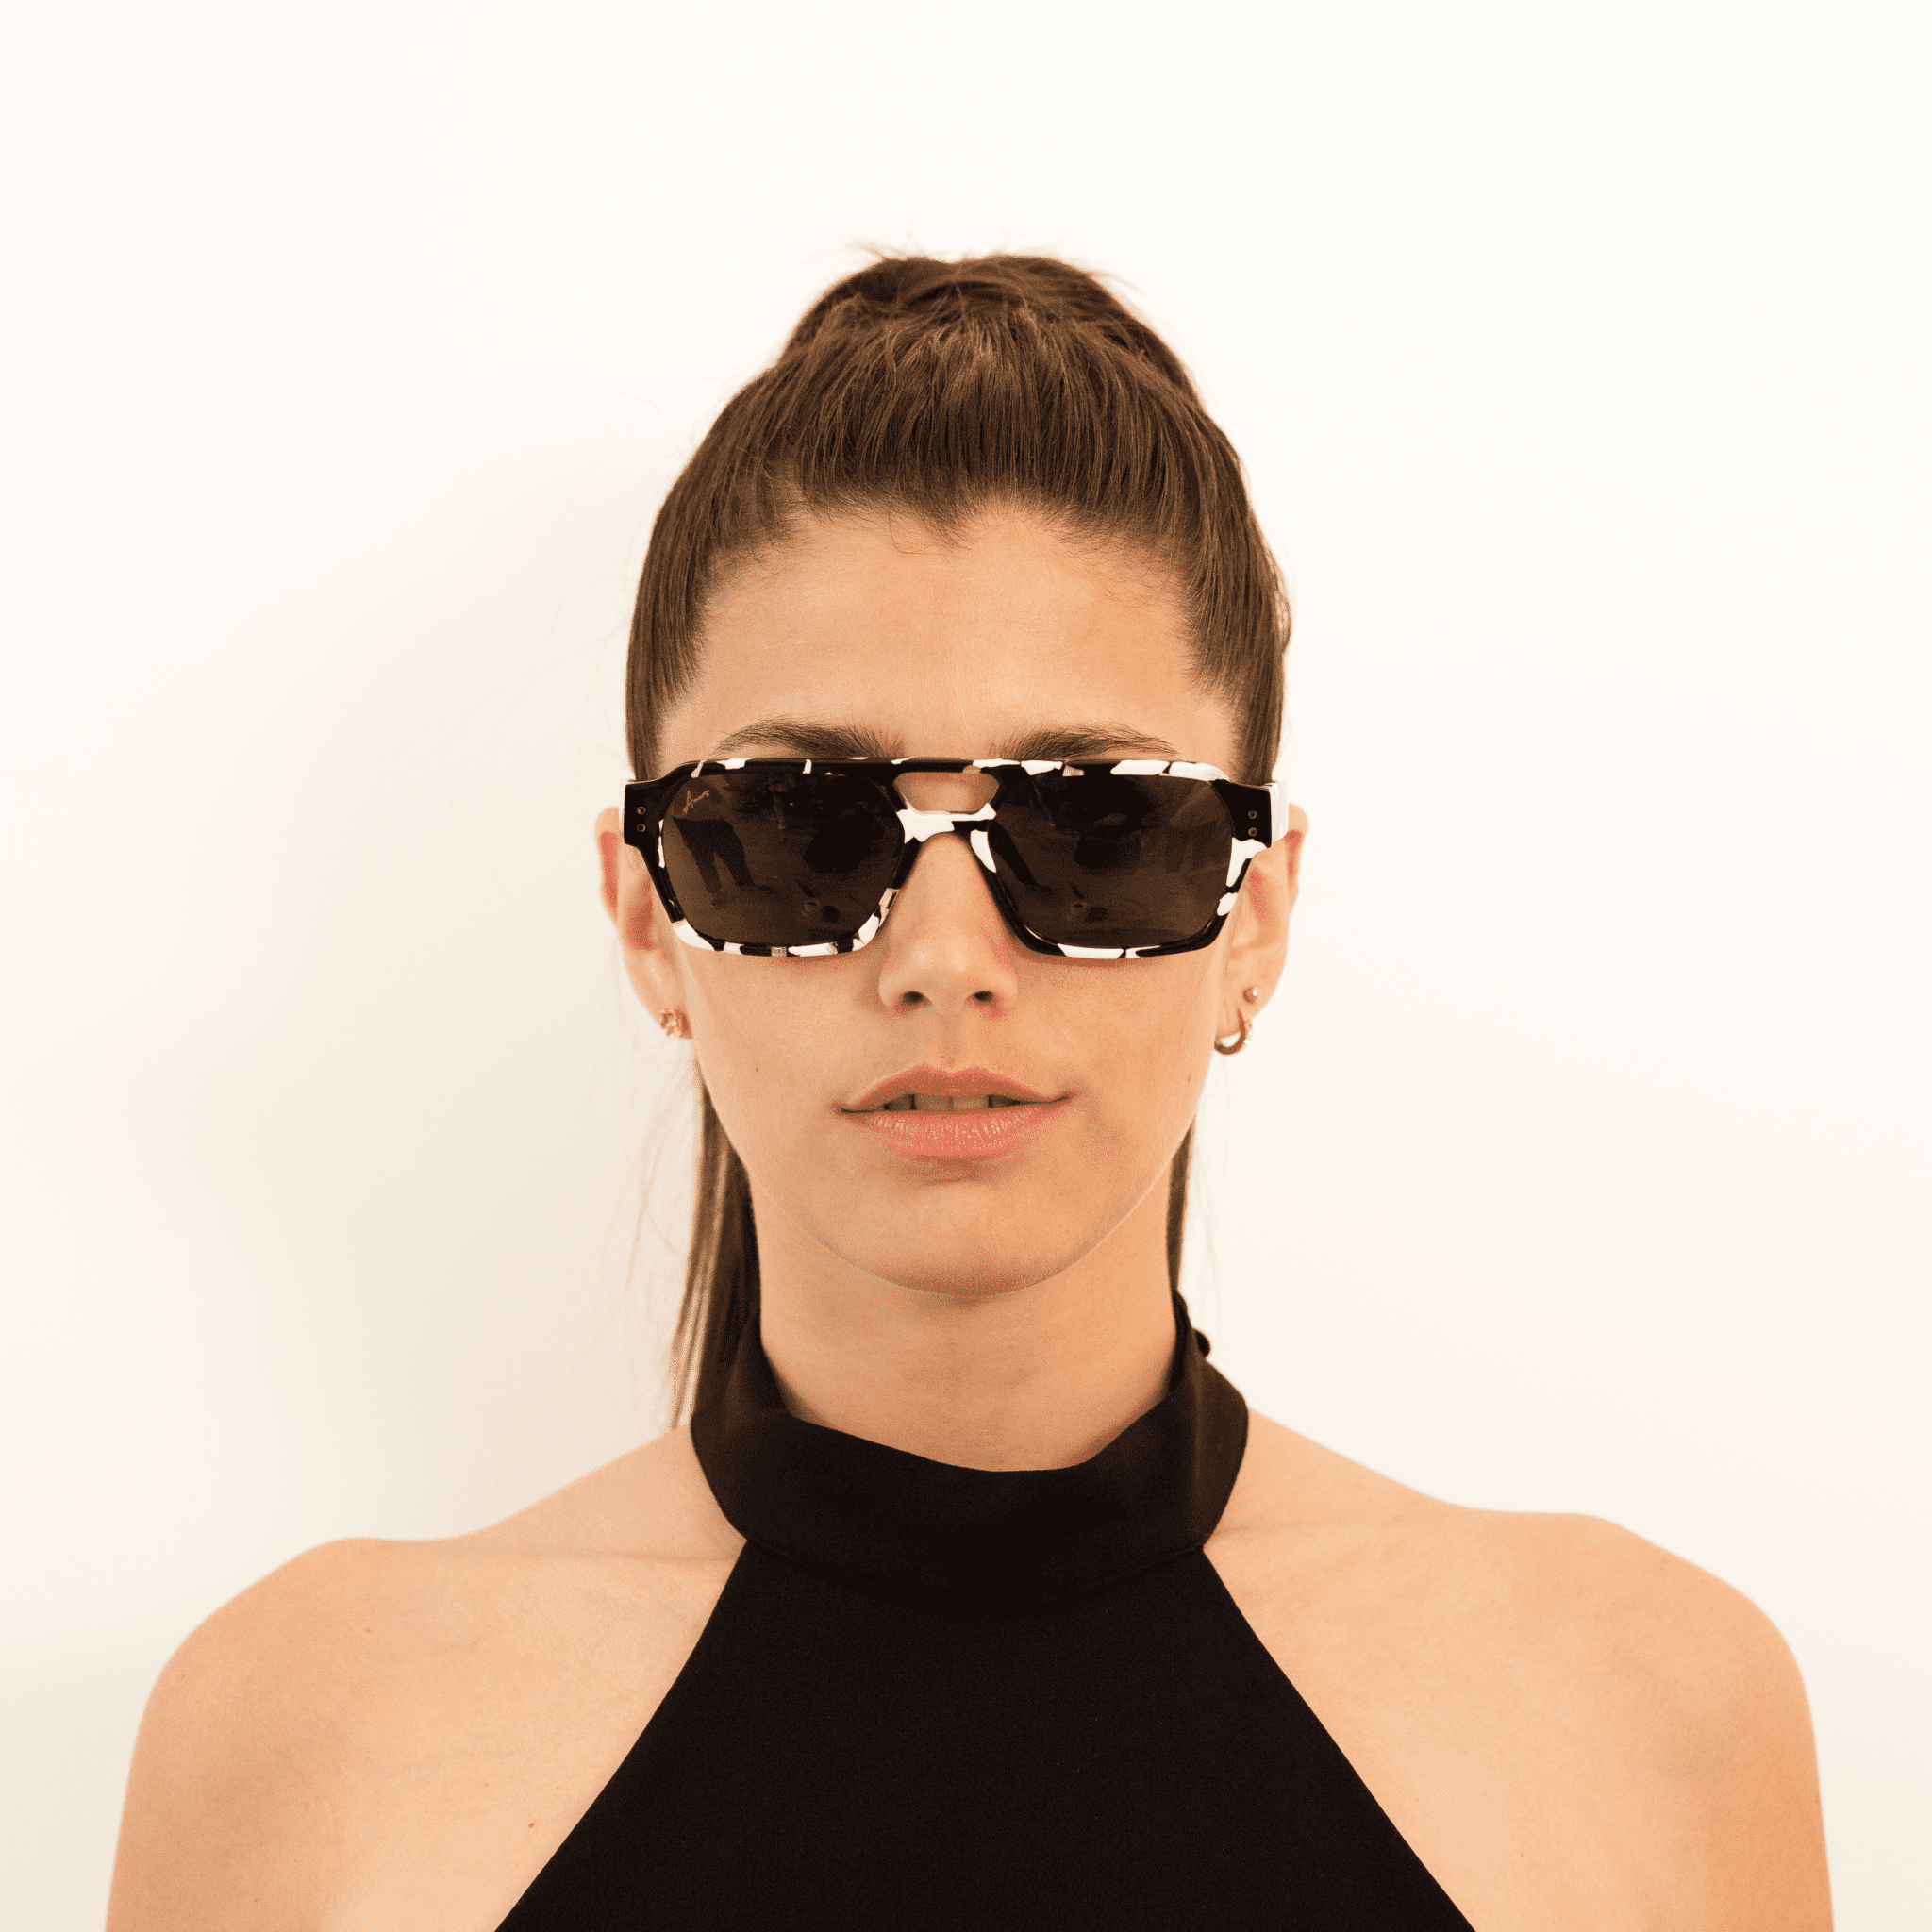 Ameos Identity collection Ego model. Black & white frames with black lenses. Genderless, gender neutral eyewear